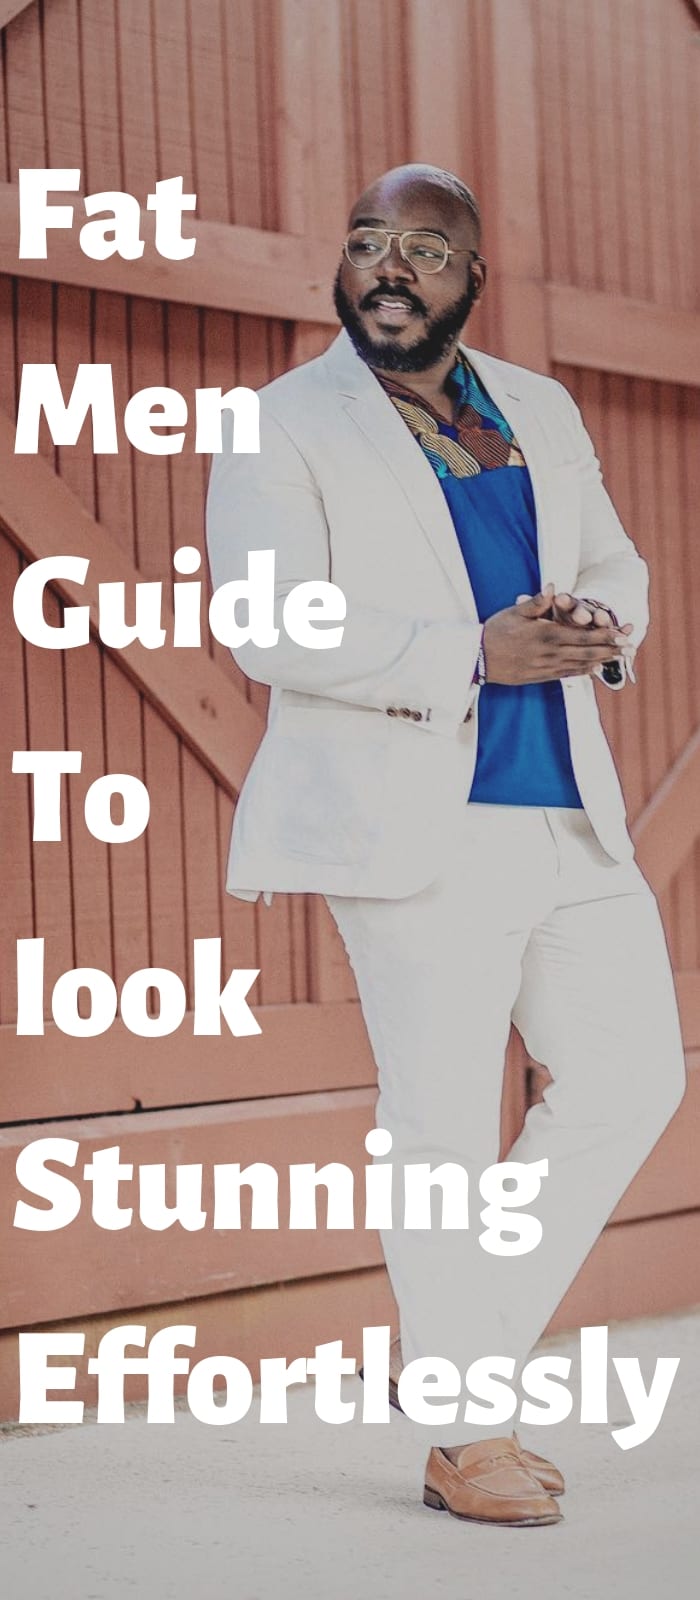 Fat Men Guide To look Stunning Effortlessly